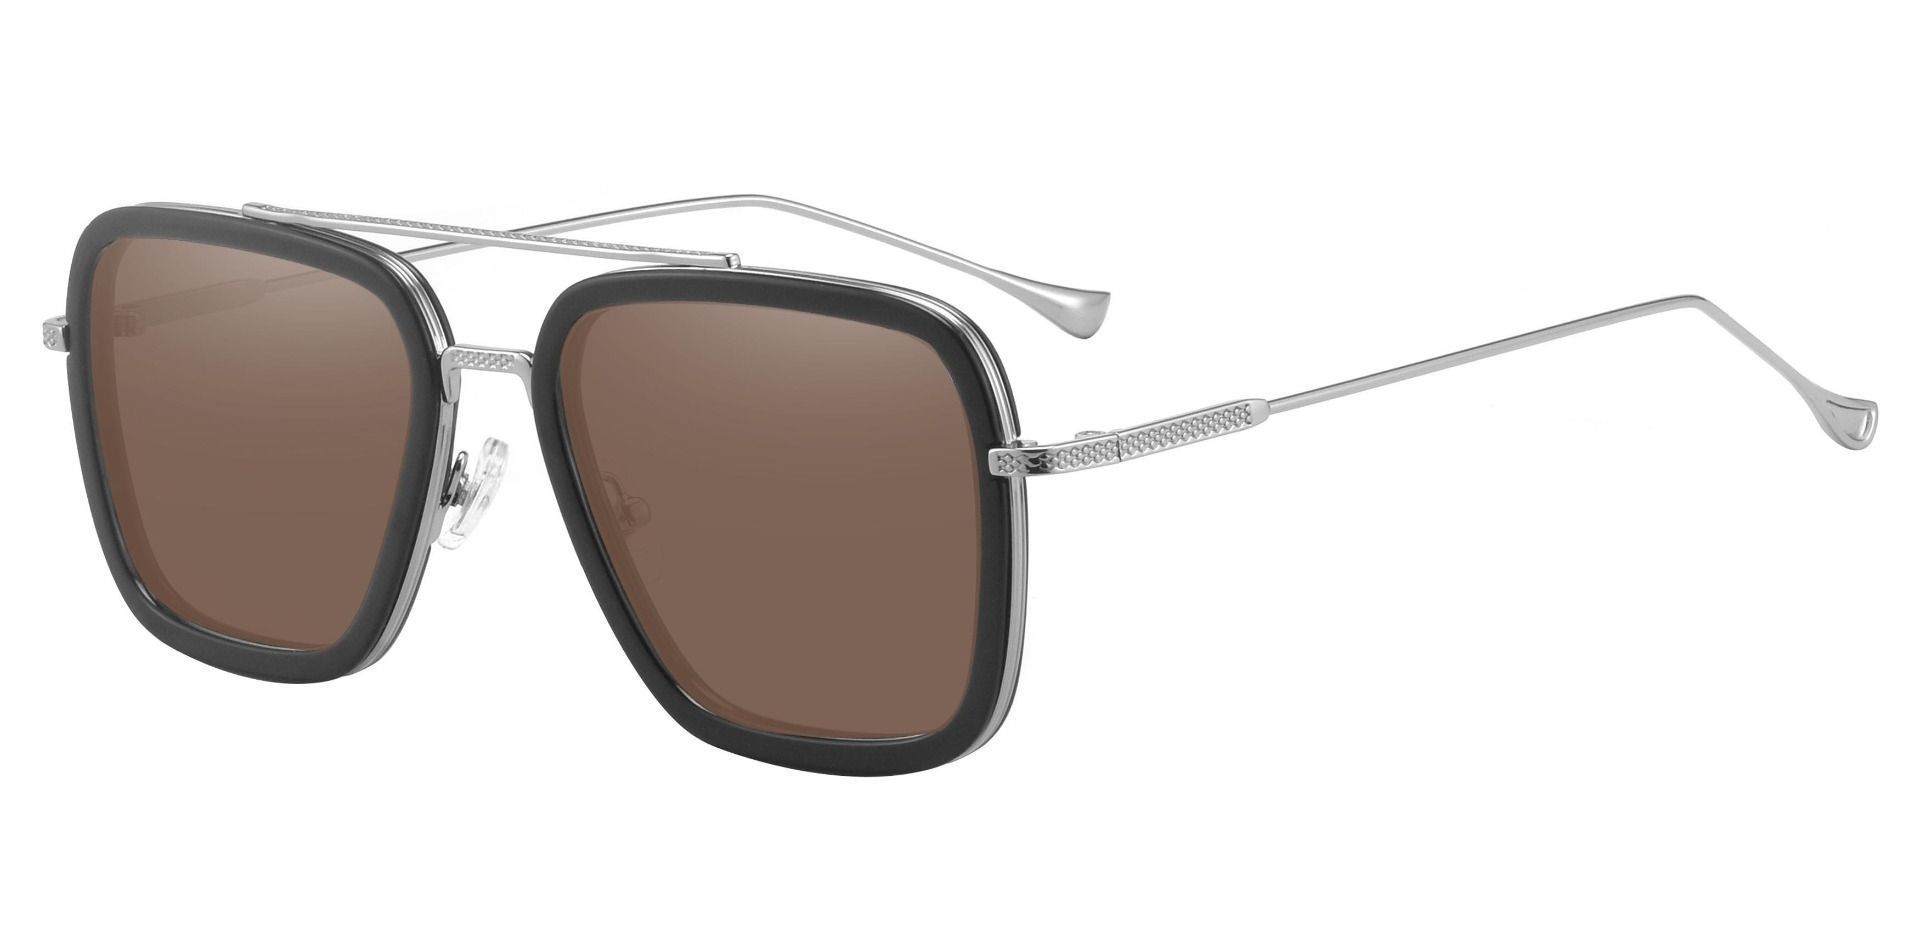 Cruz Aviator Lined Bifocal Sunglasses - Black Frame With Brown Lenses